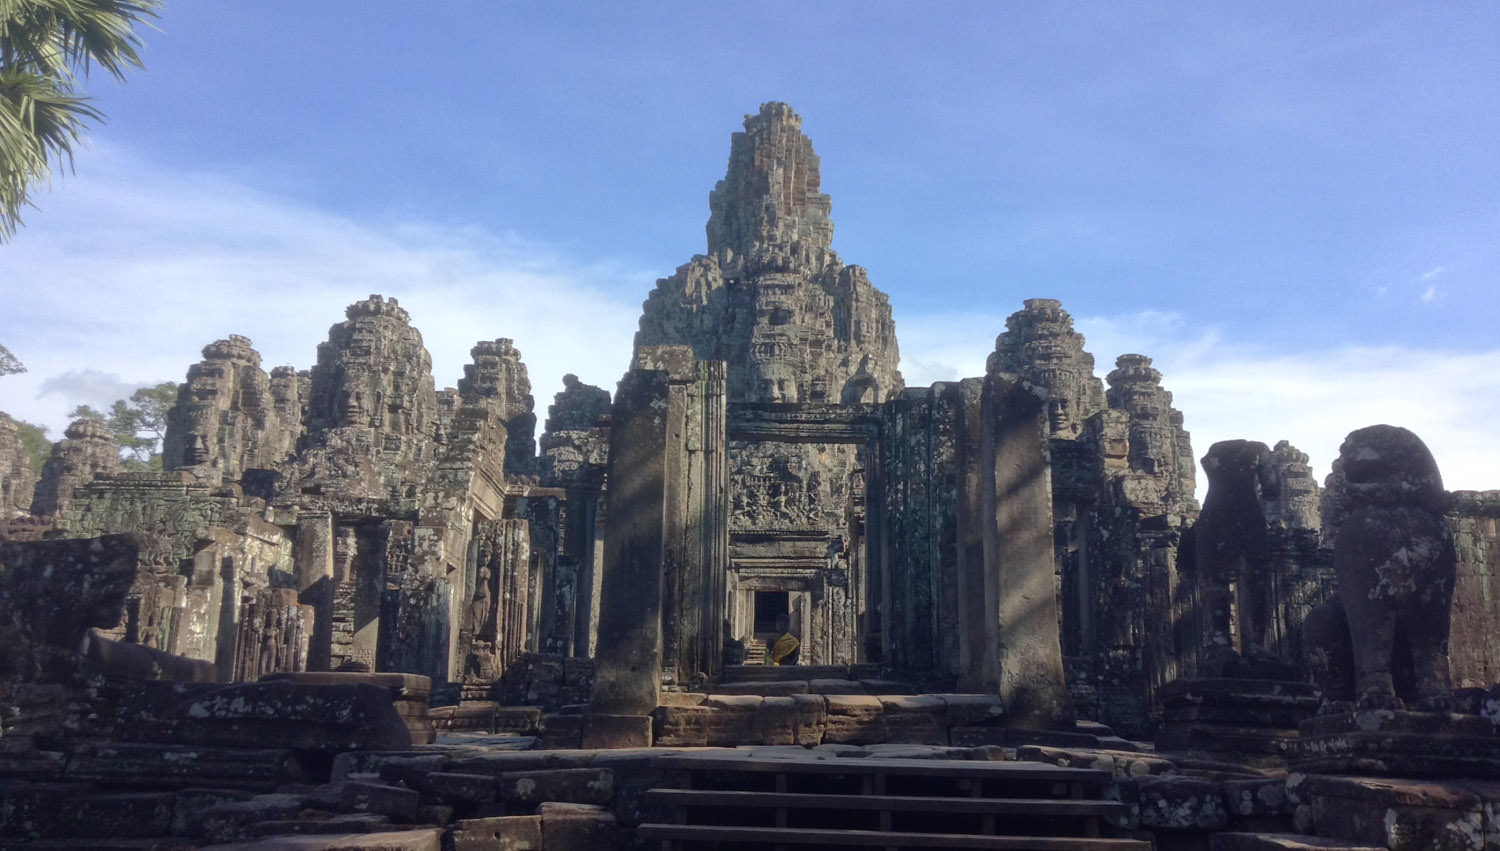 Dag 21, Met de tuk tuk naar de Angkor tempels